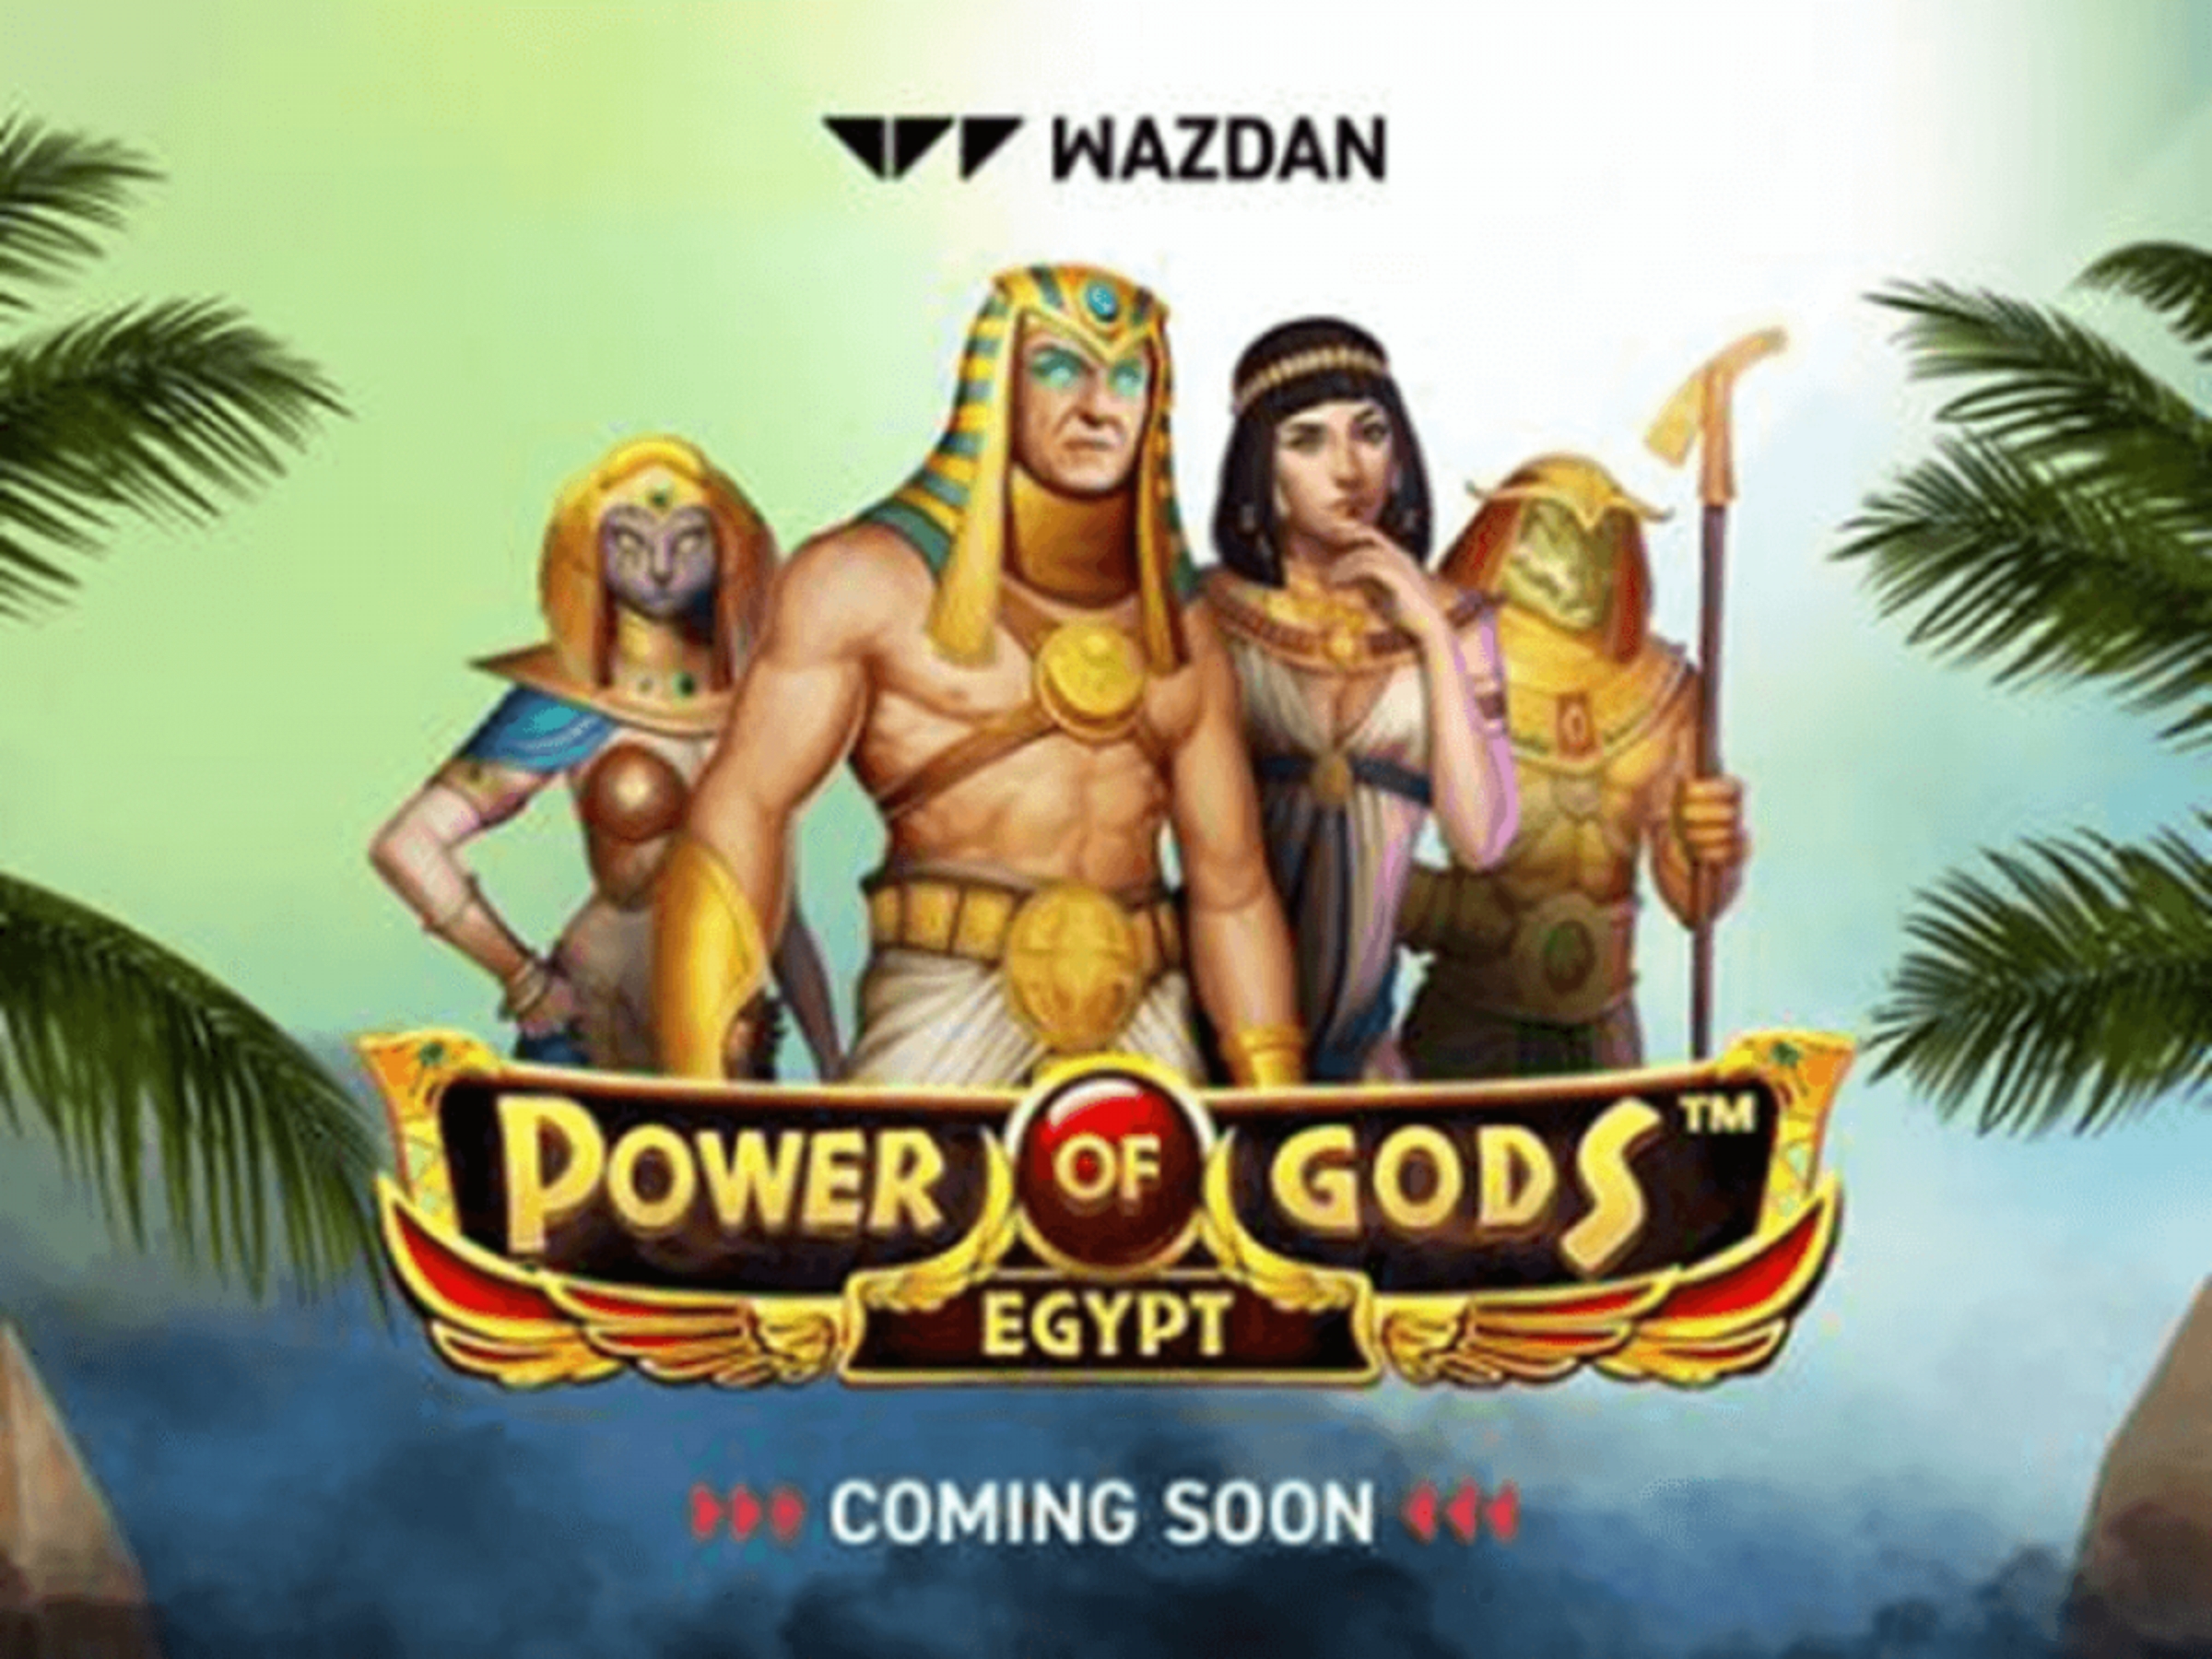 The Power of Gods: Egypt Online Slot Demo Game by Wazdan